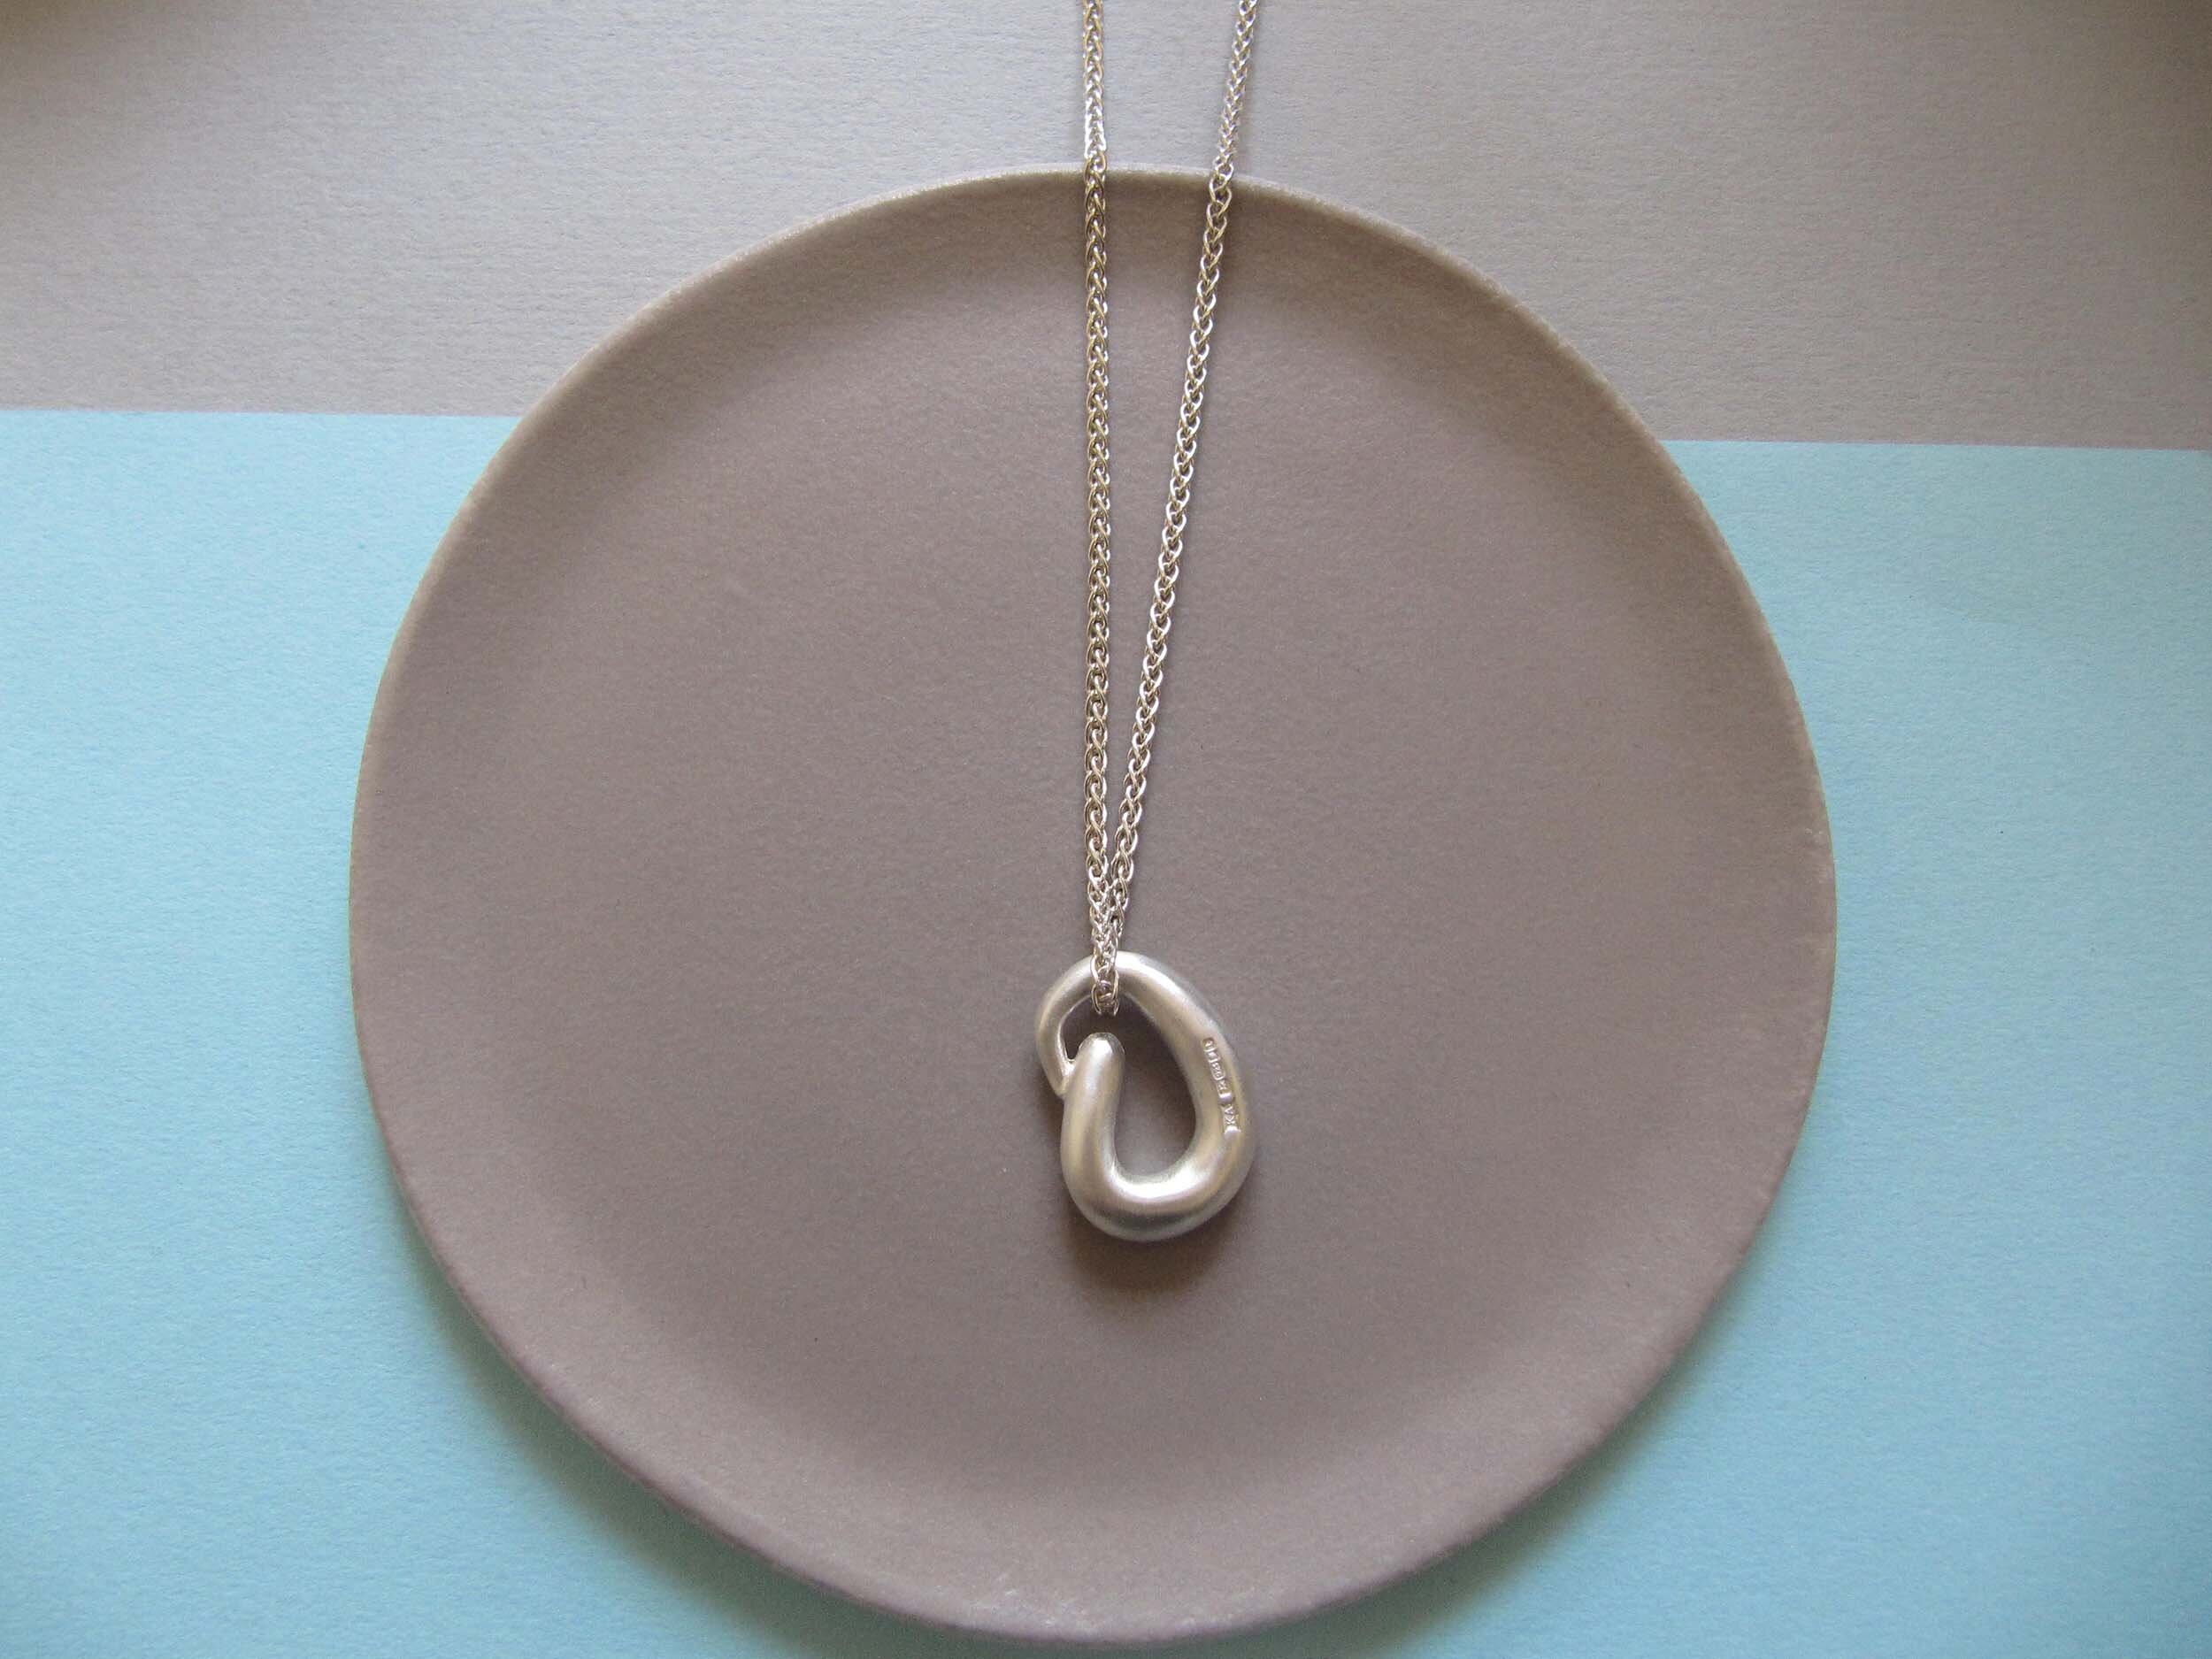  Title: Infinity Curve necklace  Medium: Silver  Price: £110 